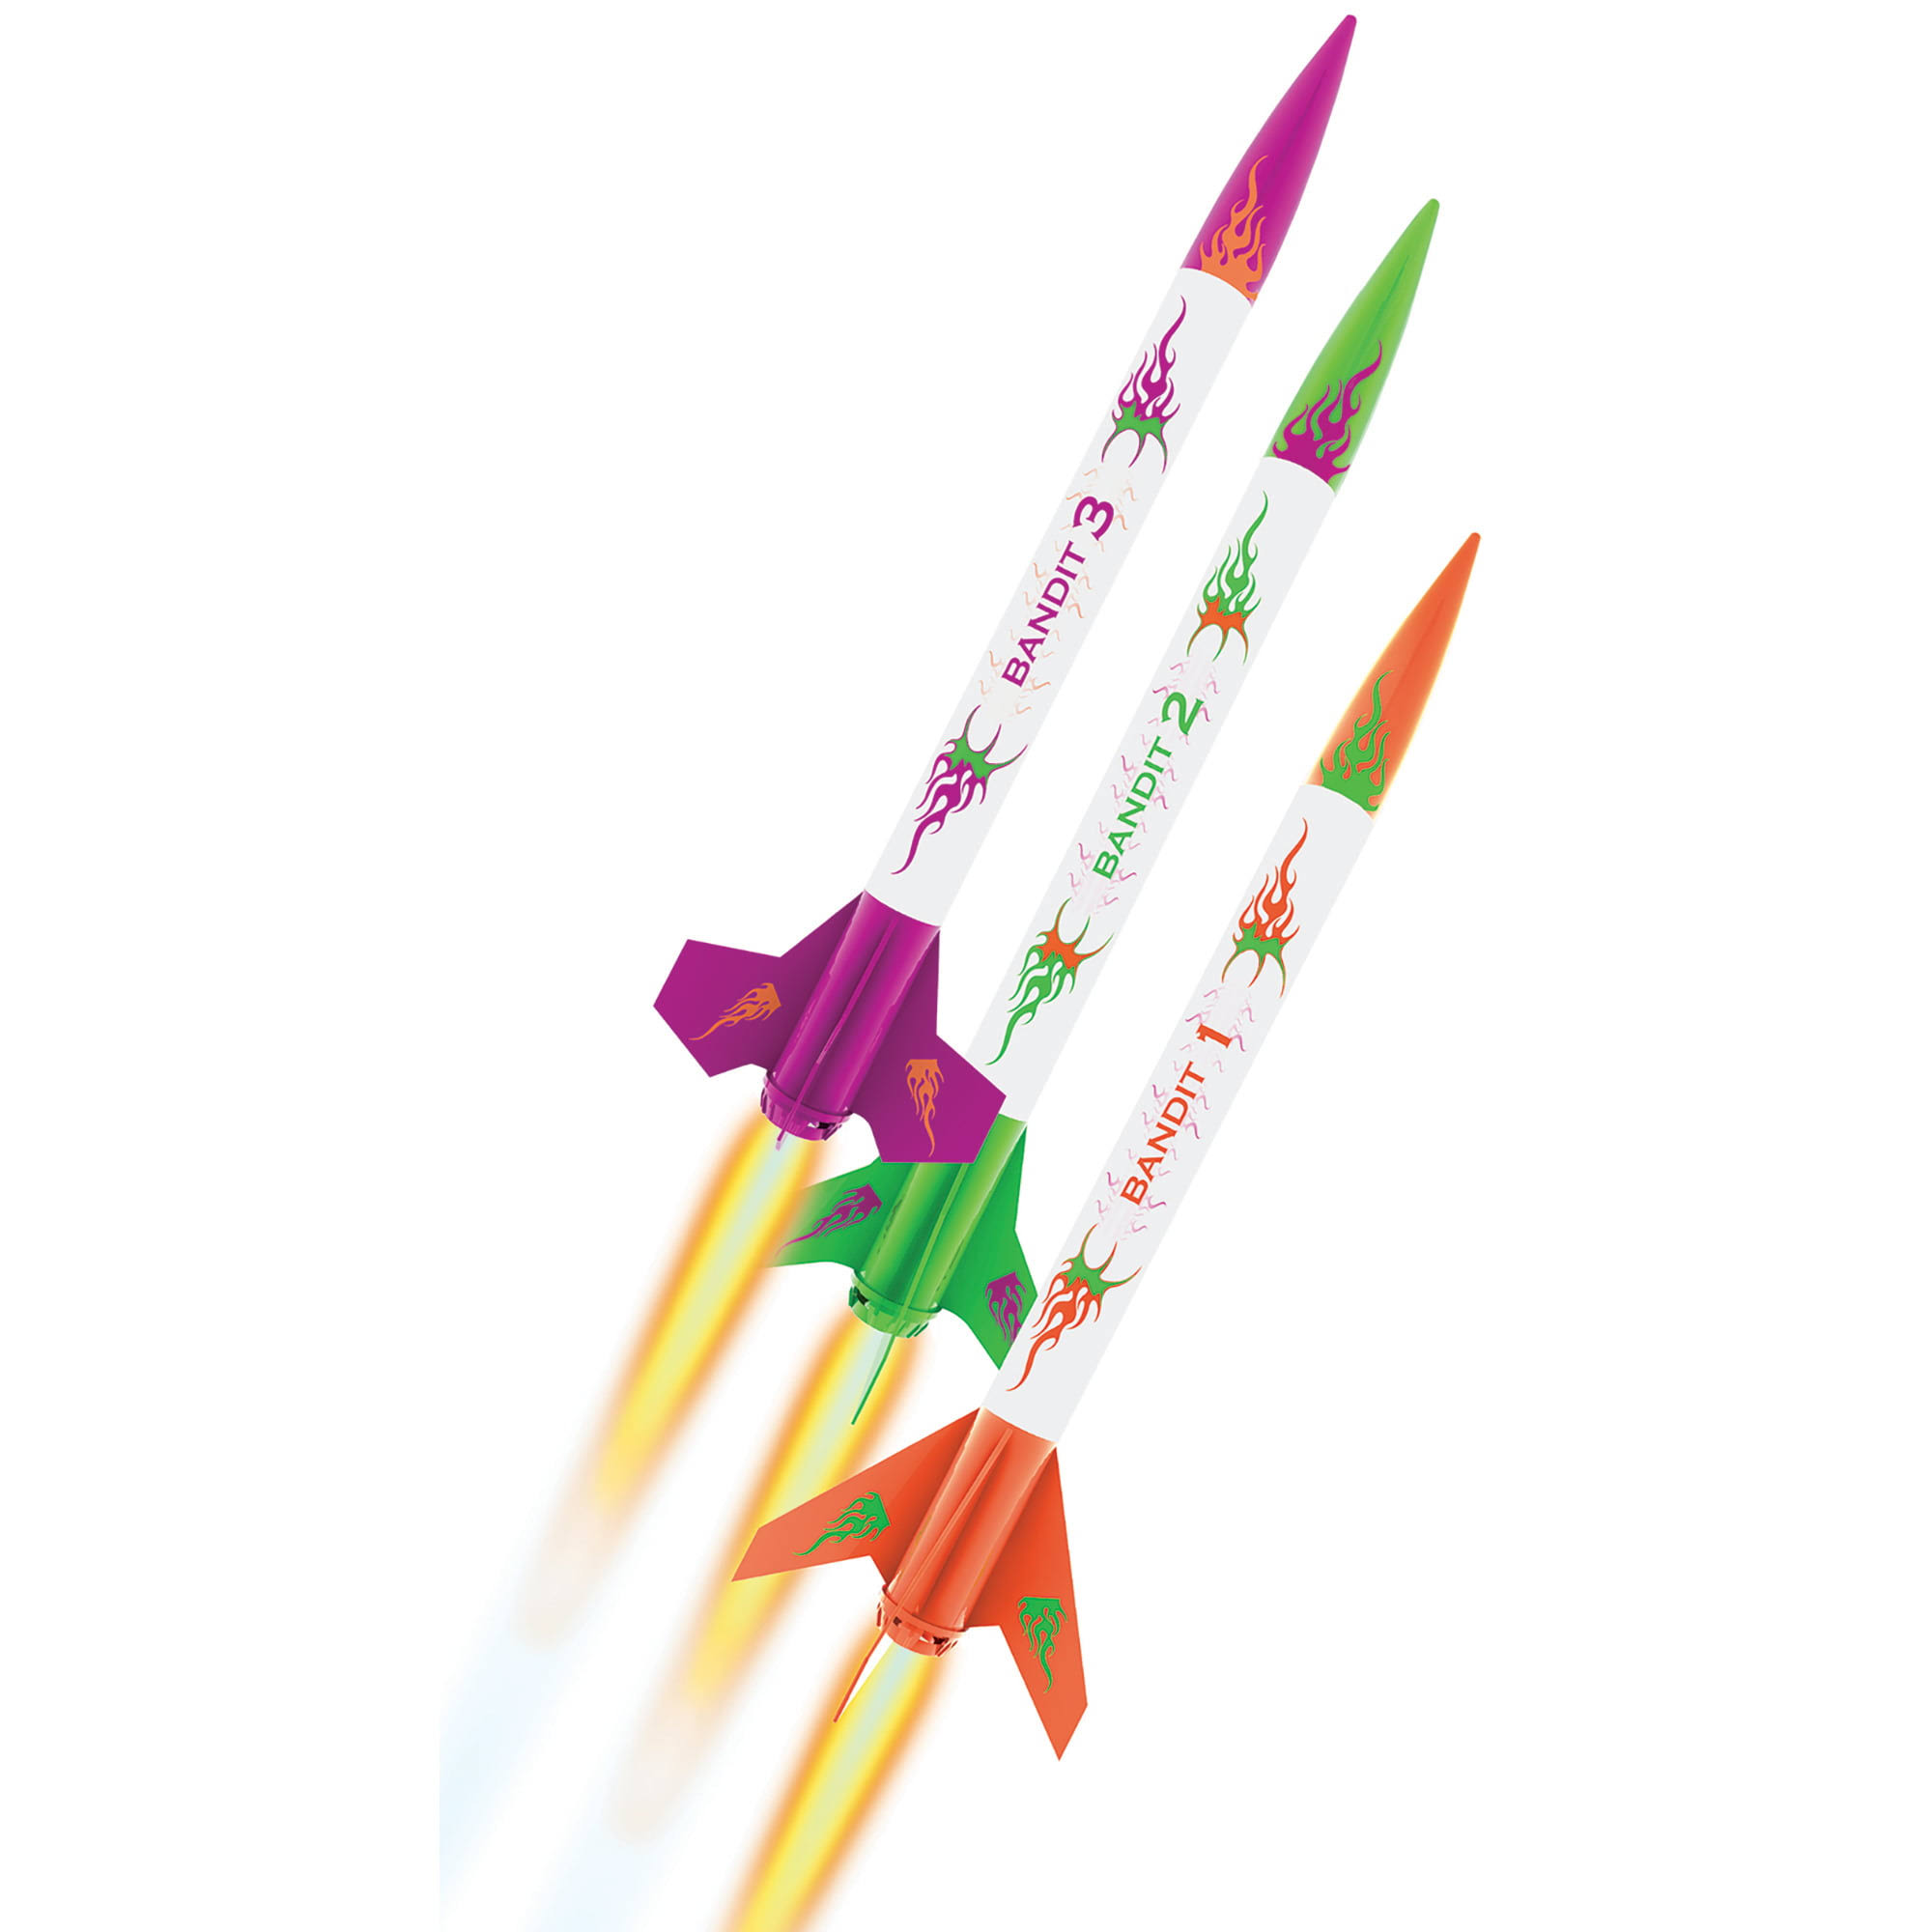 Estes Flying Model Rocket Kit